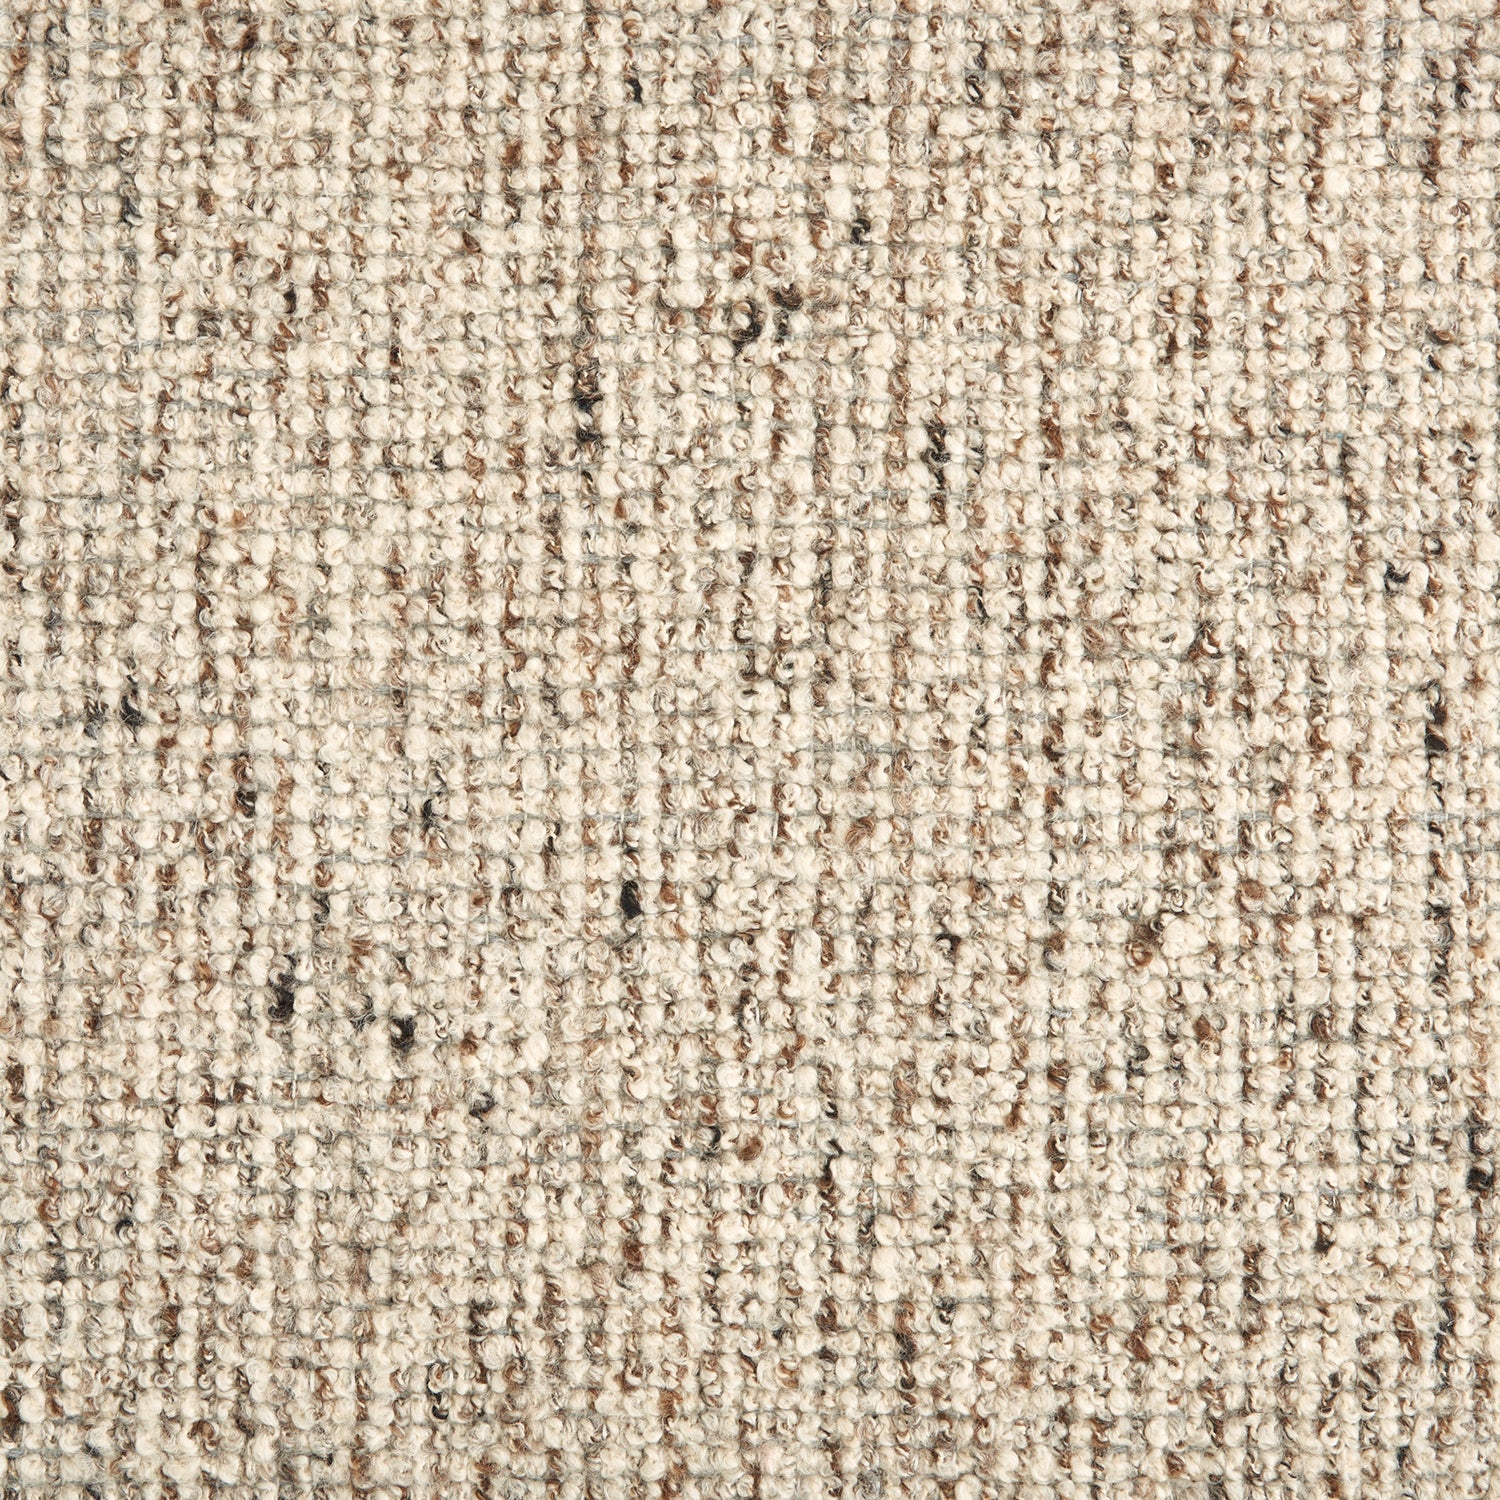 Wool broadloom carpet swatch in a textured high-pile weave in mottled cream.